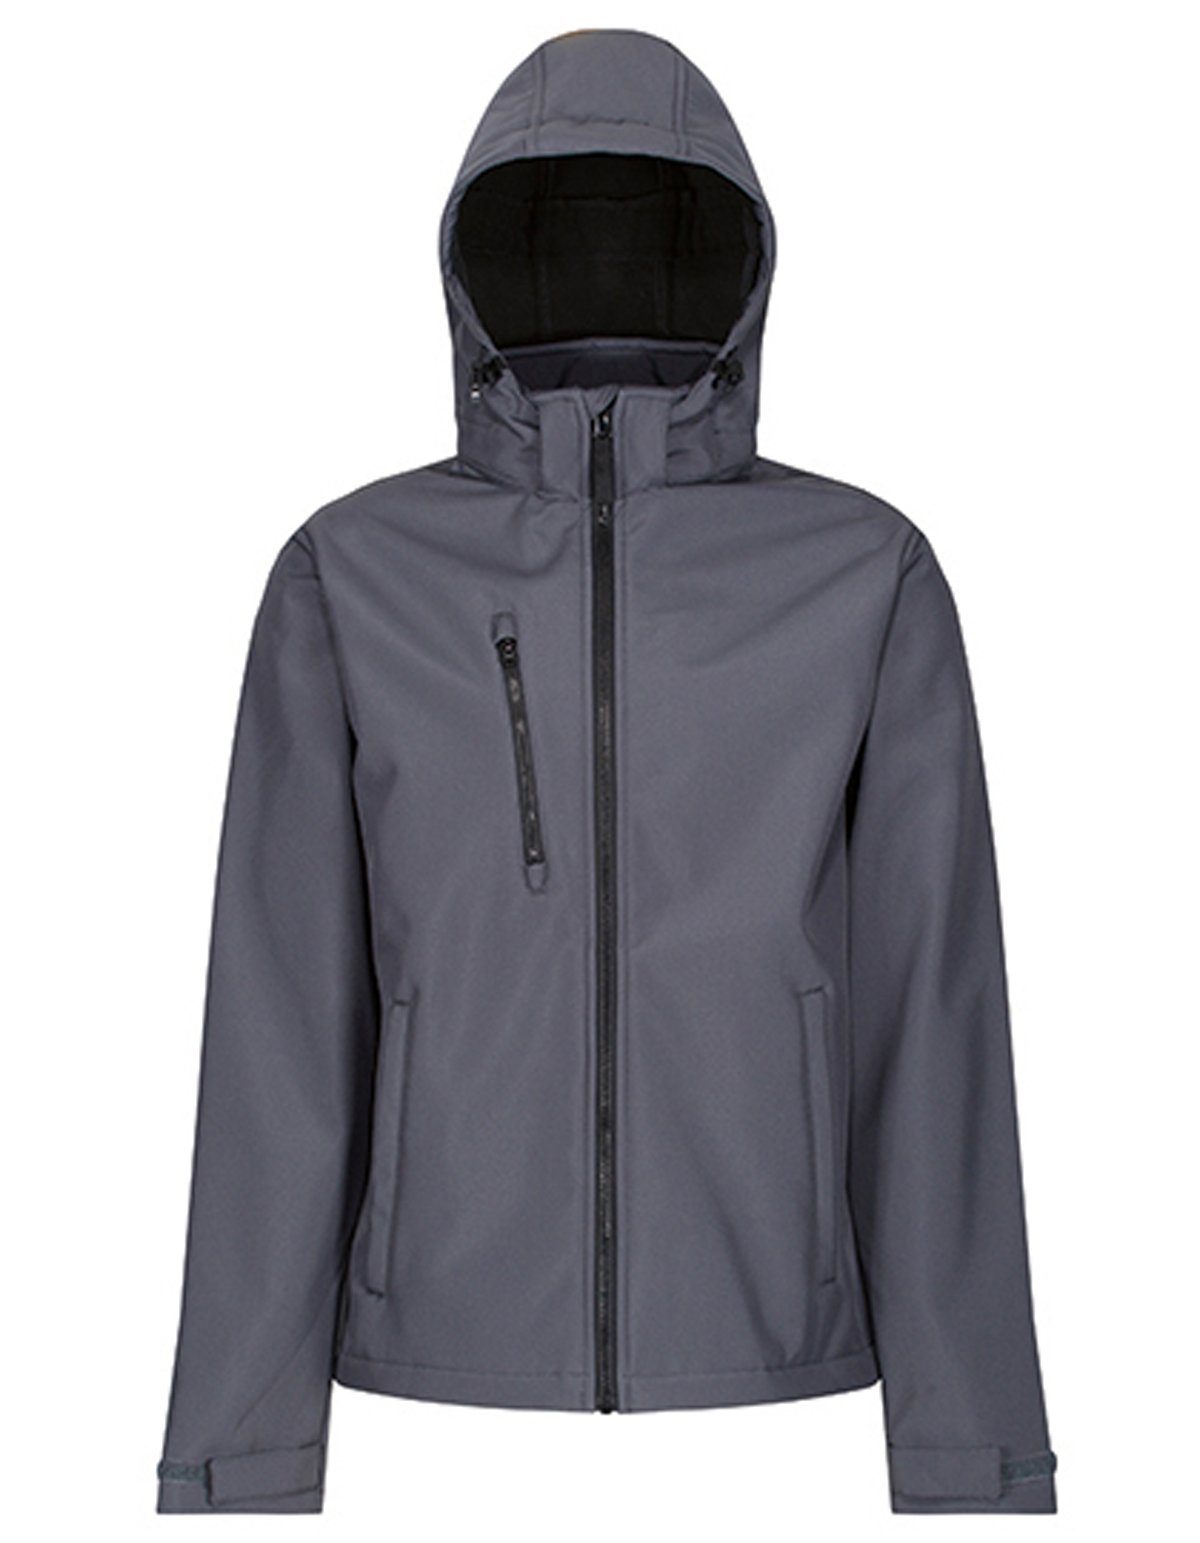 Regatta Professional Softshelljacke Venturer 3-layer Printable Hooded Softshell Jacket RG701 seal grey-black